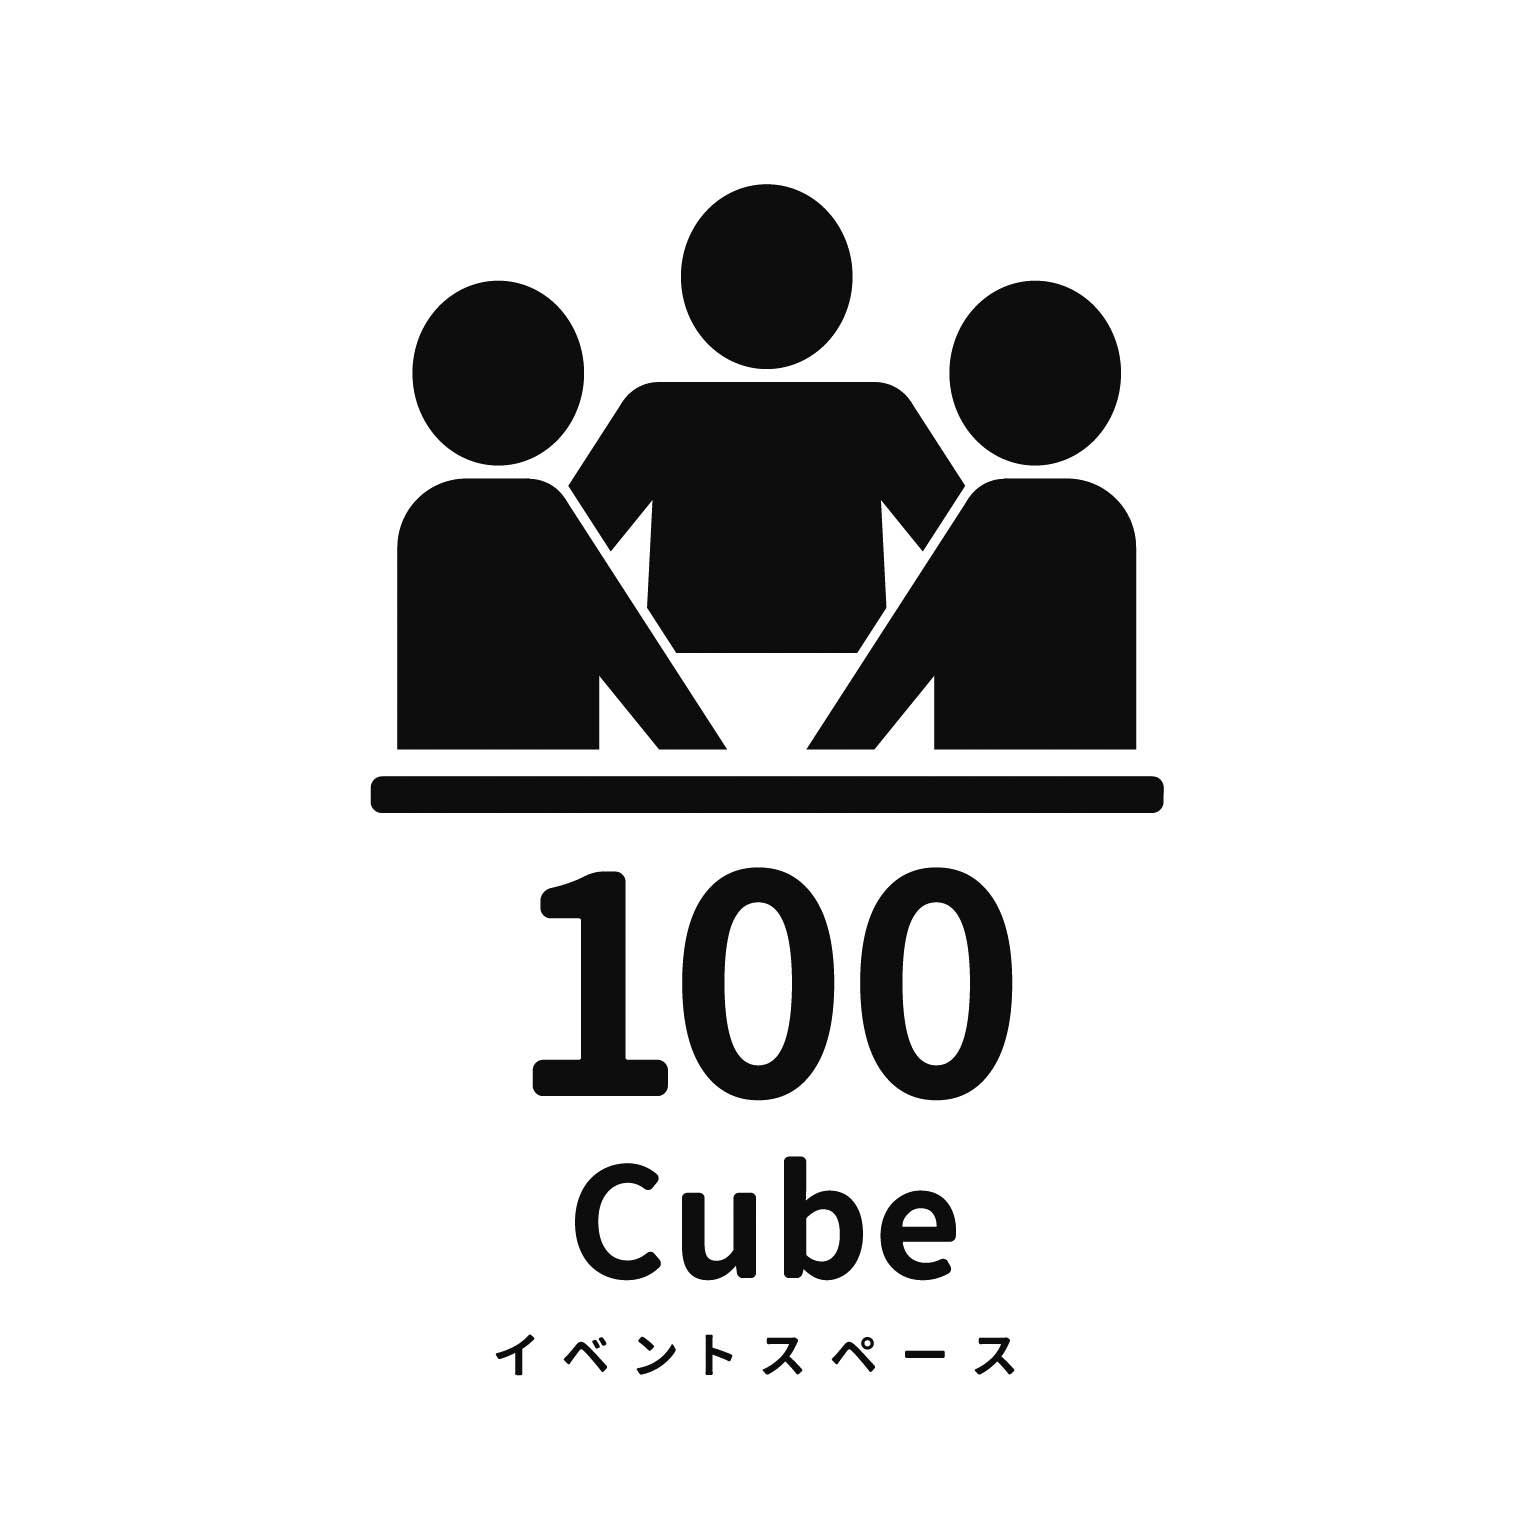 100 Cube